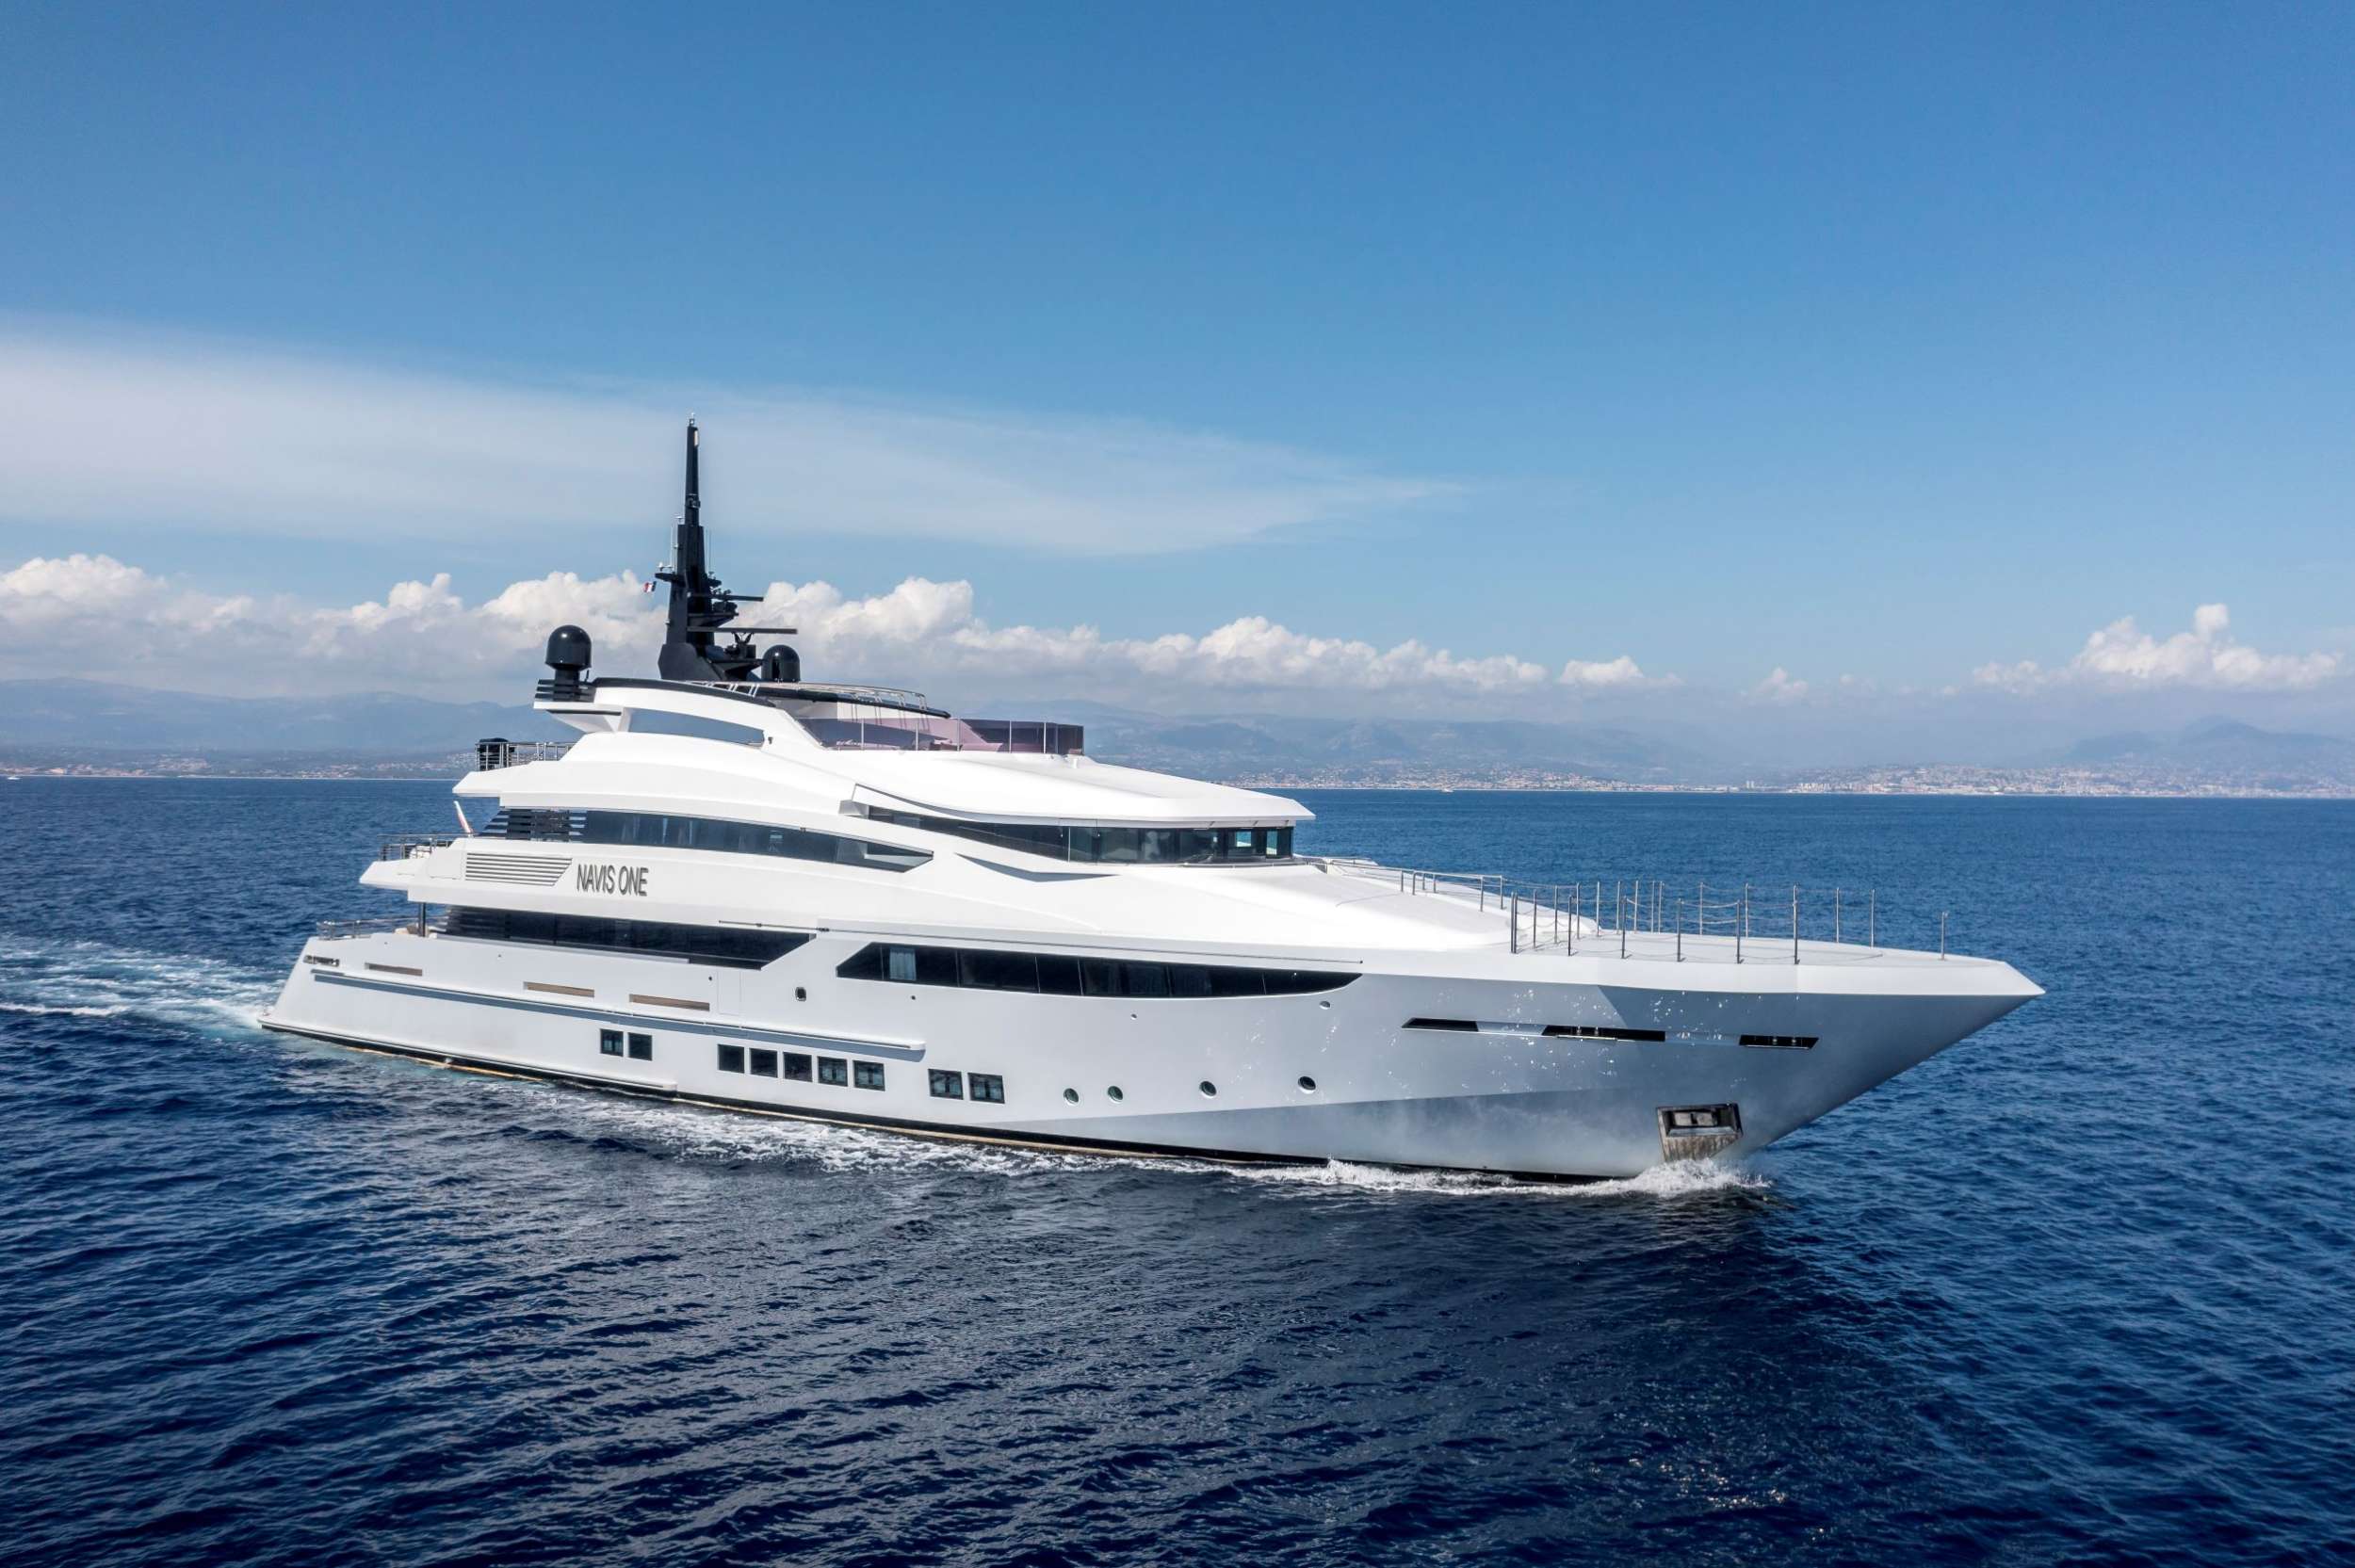 NAVIS ONE - Yacht Charter Kuredhivaru & Boat hire in Summer: W. Med -Naples/Sicily, Greece, W. Med -Riviera/Cors/Sard., Turkey, W. Med - Spain/Balearics, Croatia | Winter: Indian Ocean and SE Asia, Red Sea, United Arab Emirates 1